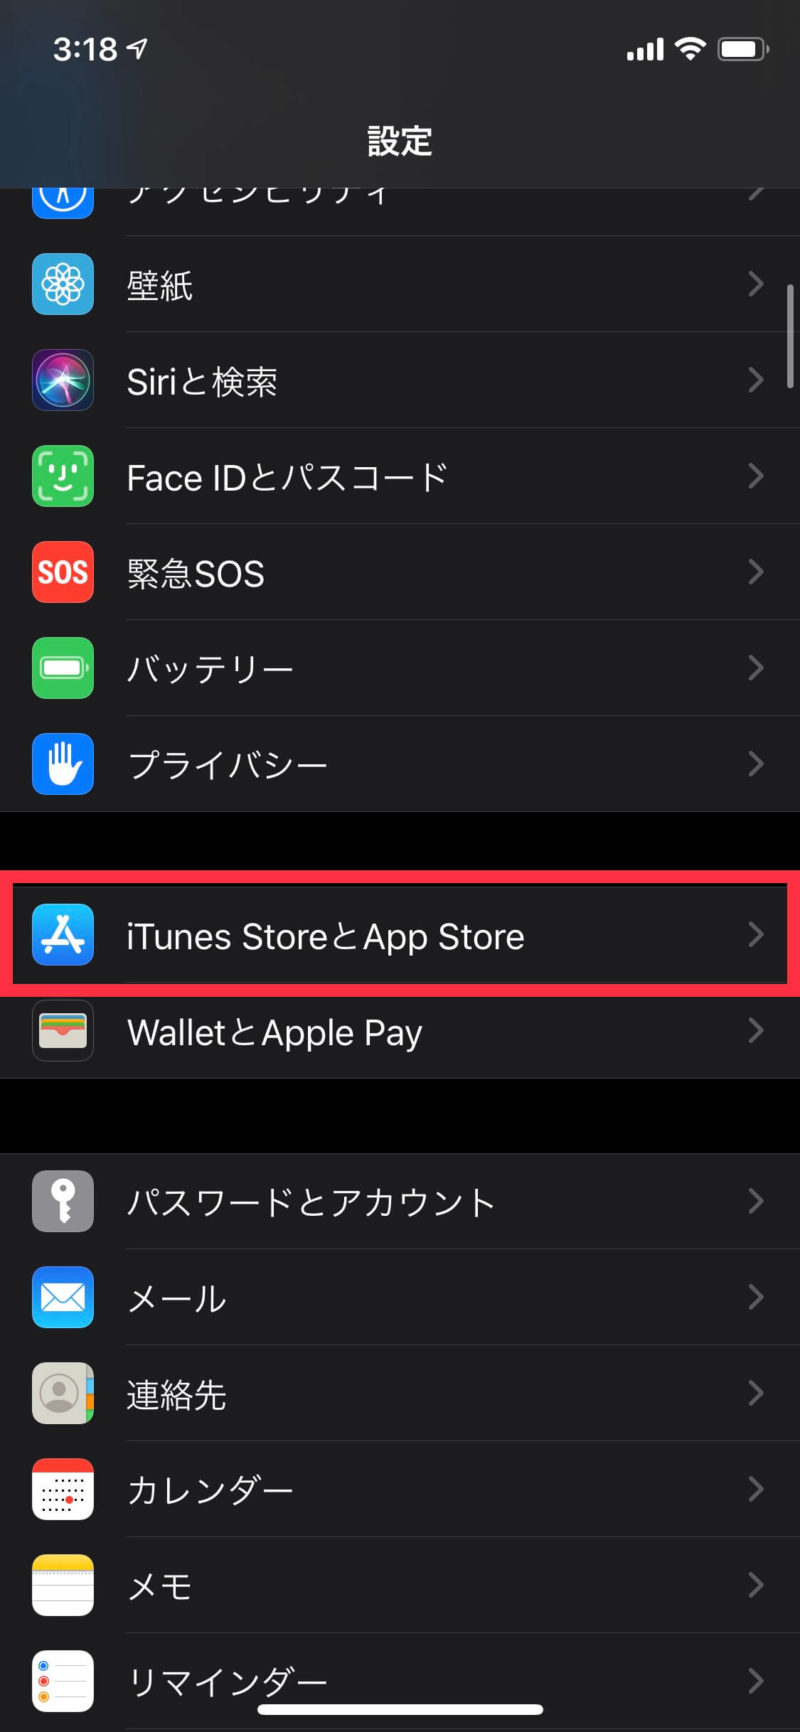 iTunes storeとApp store